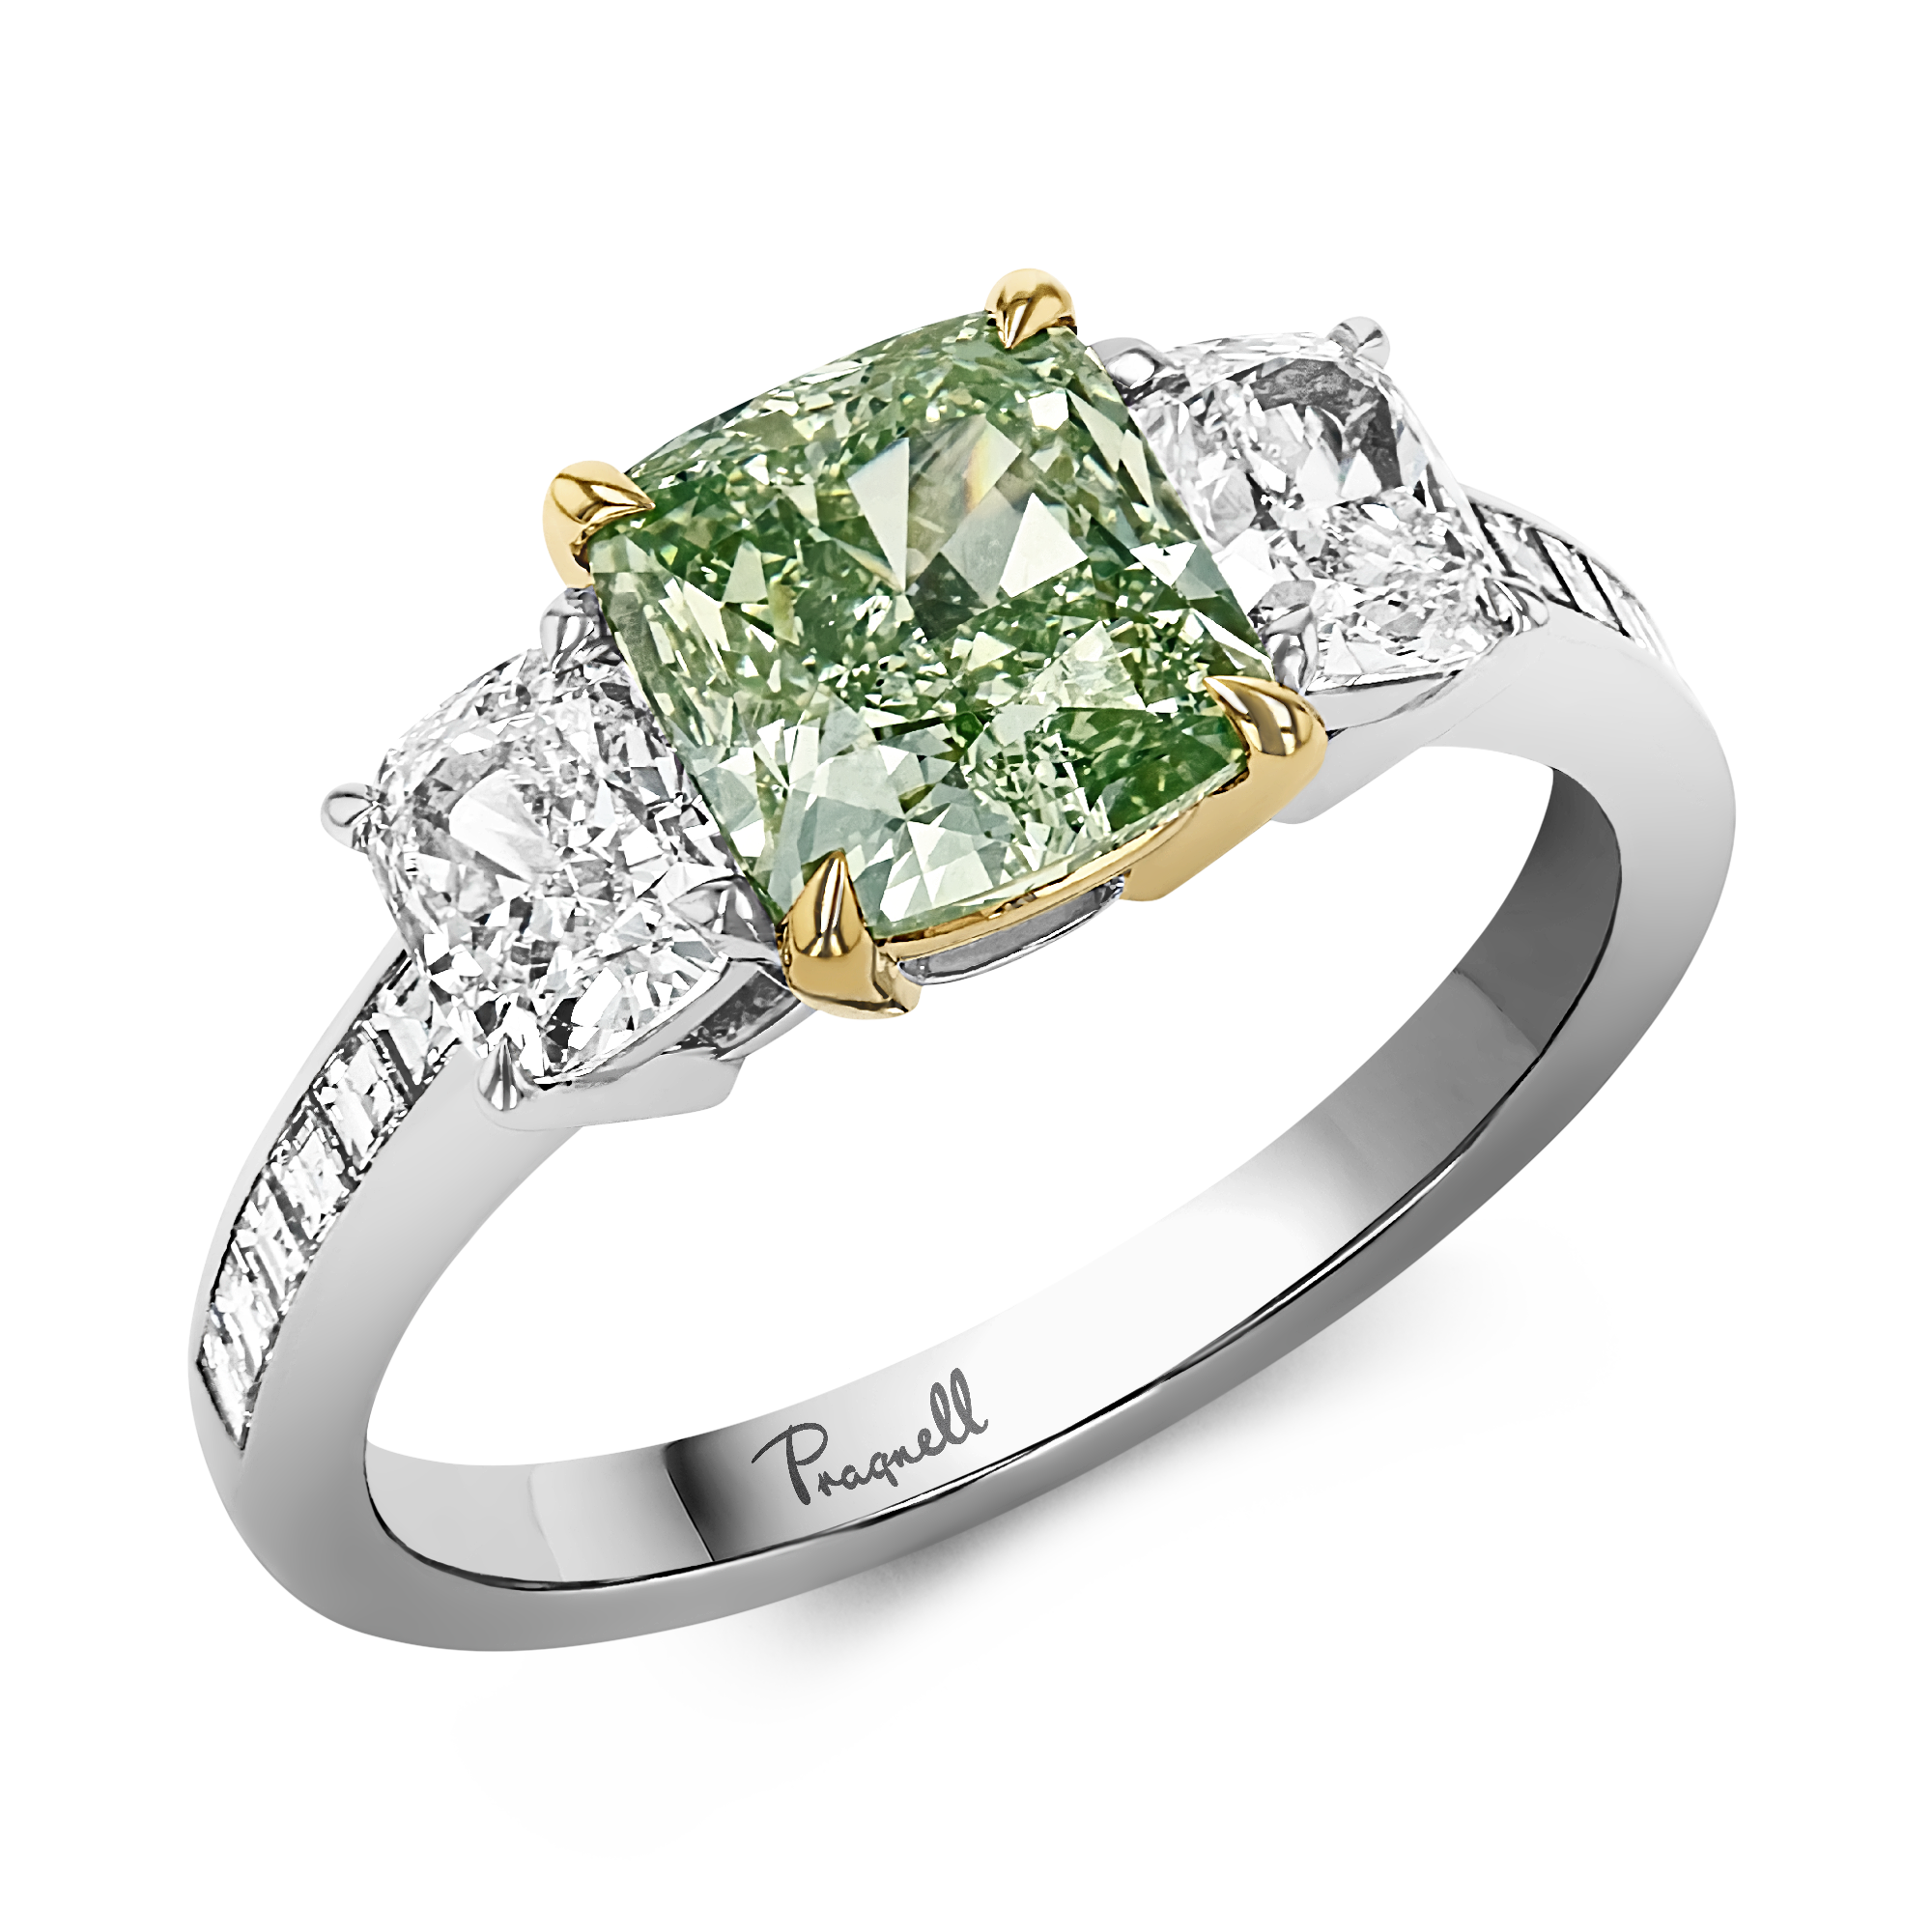 Masterpiece 2.07ct Fancy Intense Yellowish-Green Diamond Ring Cushion modern cut, Claw set_1